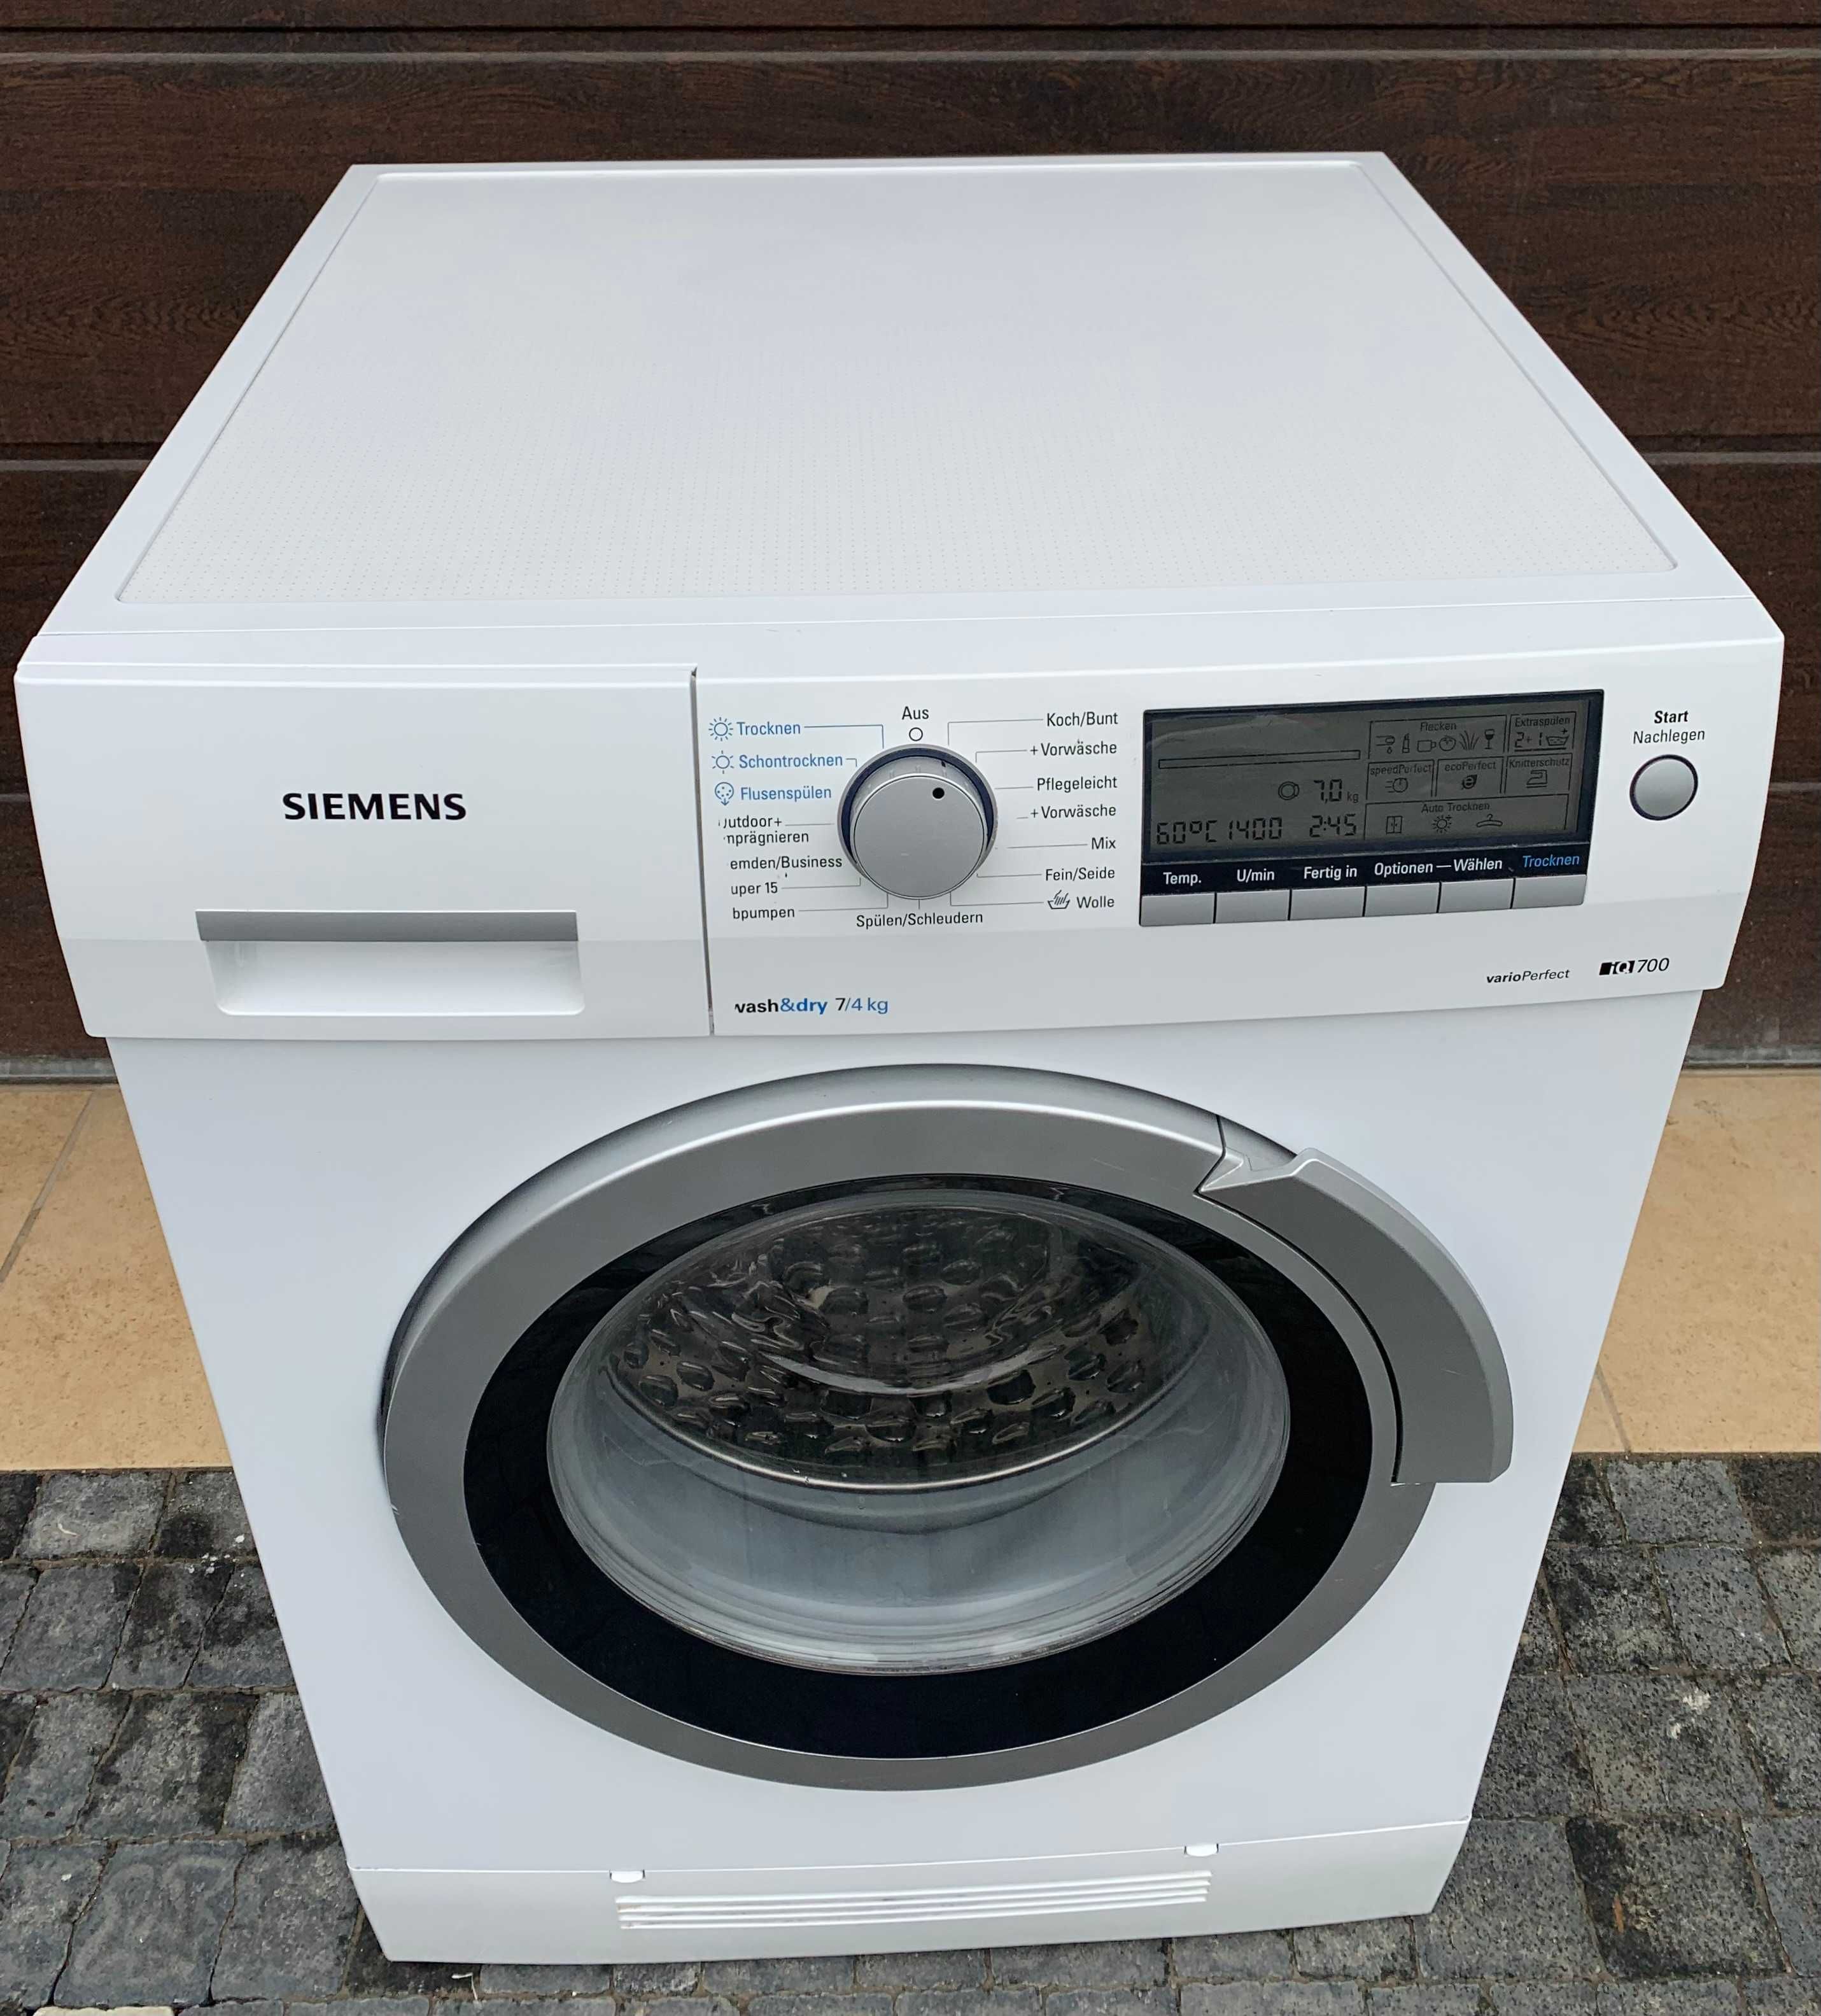 Пральна стиральная машина з сушкою 2в1 Siemens IQ700  WD14H540  7/4кг